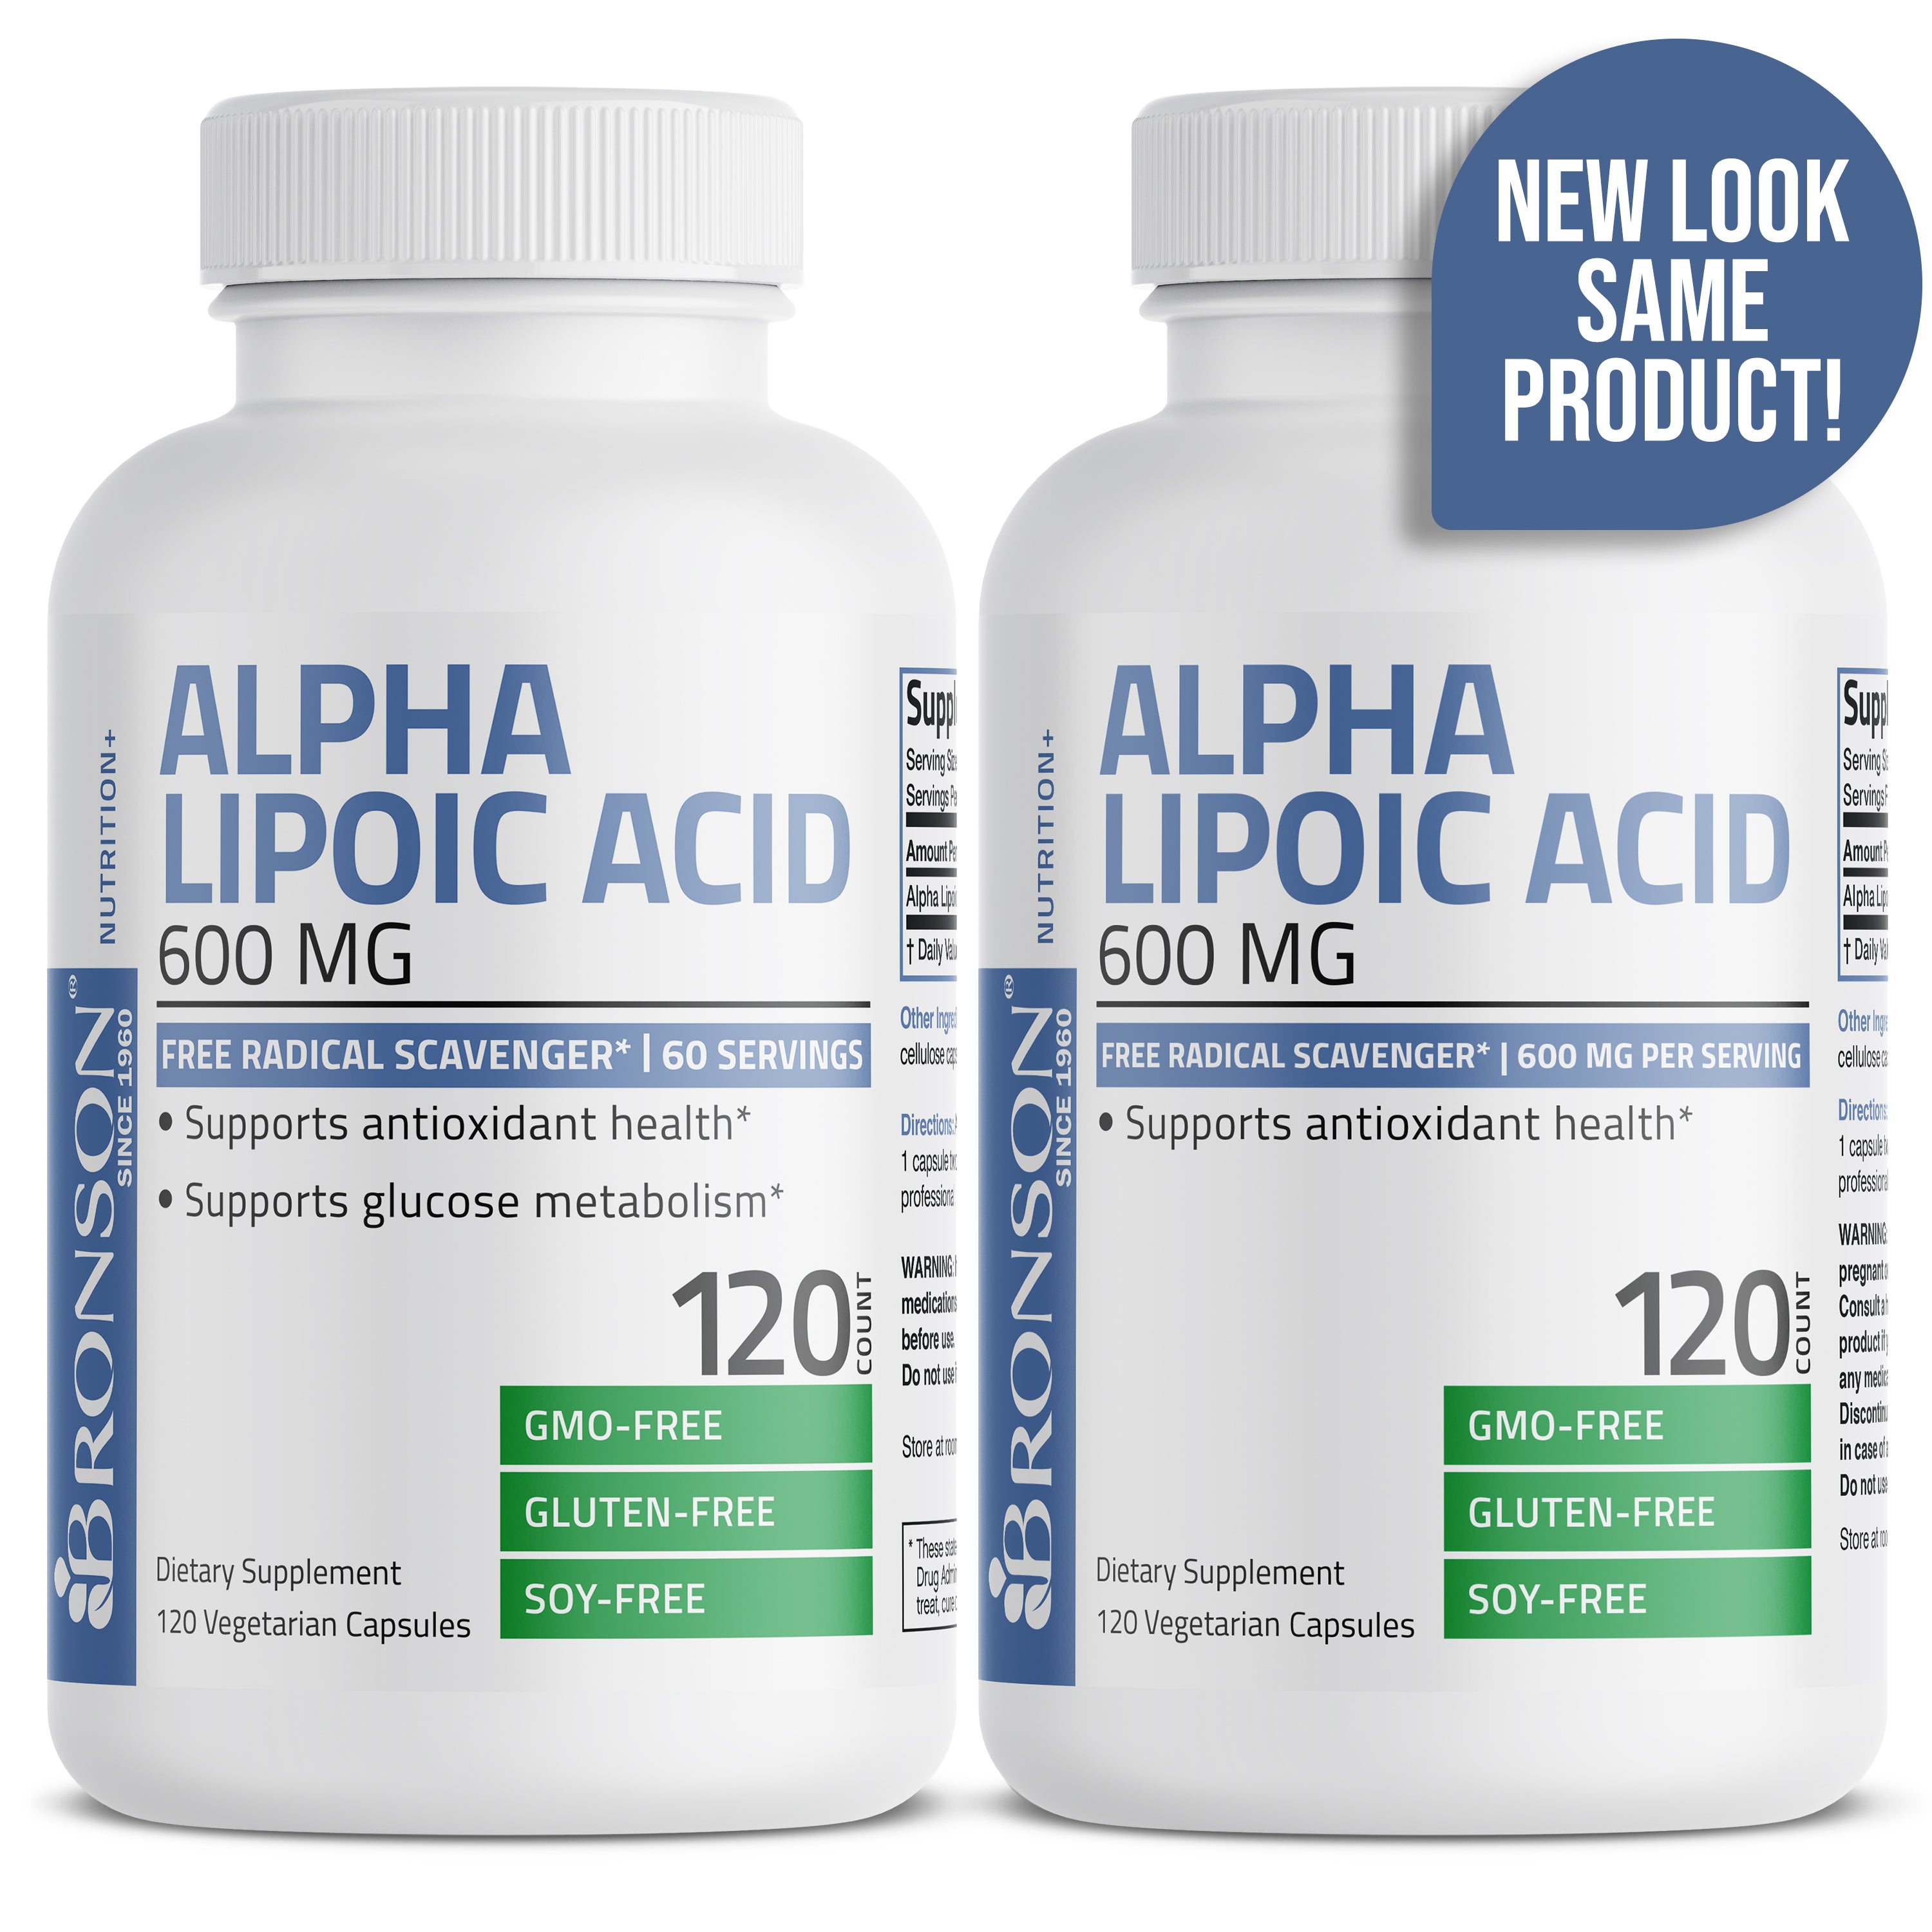 Alpha Lipoic Acid 600 MG view 3 of 14